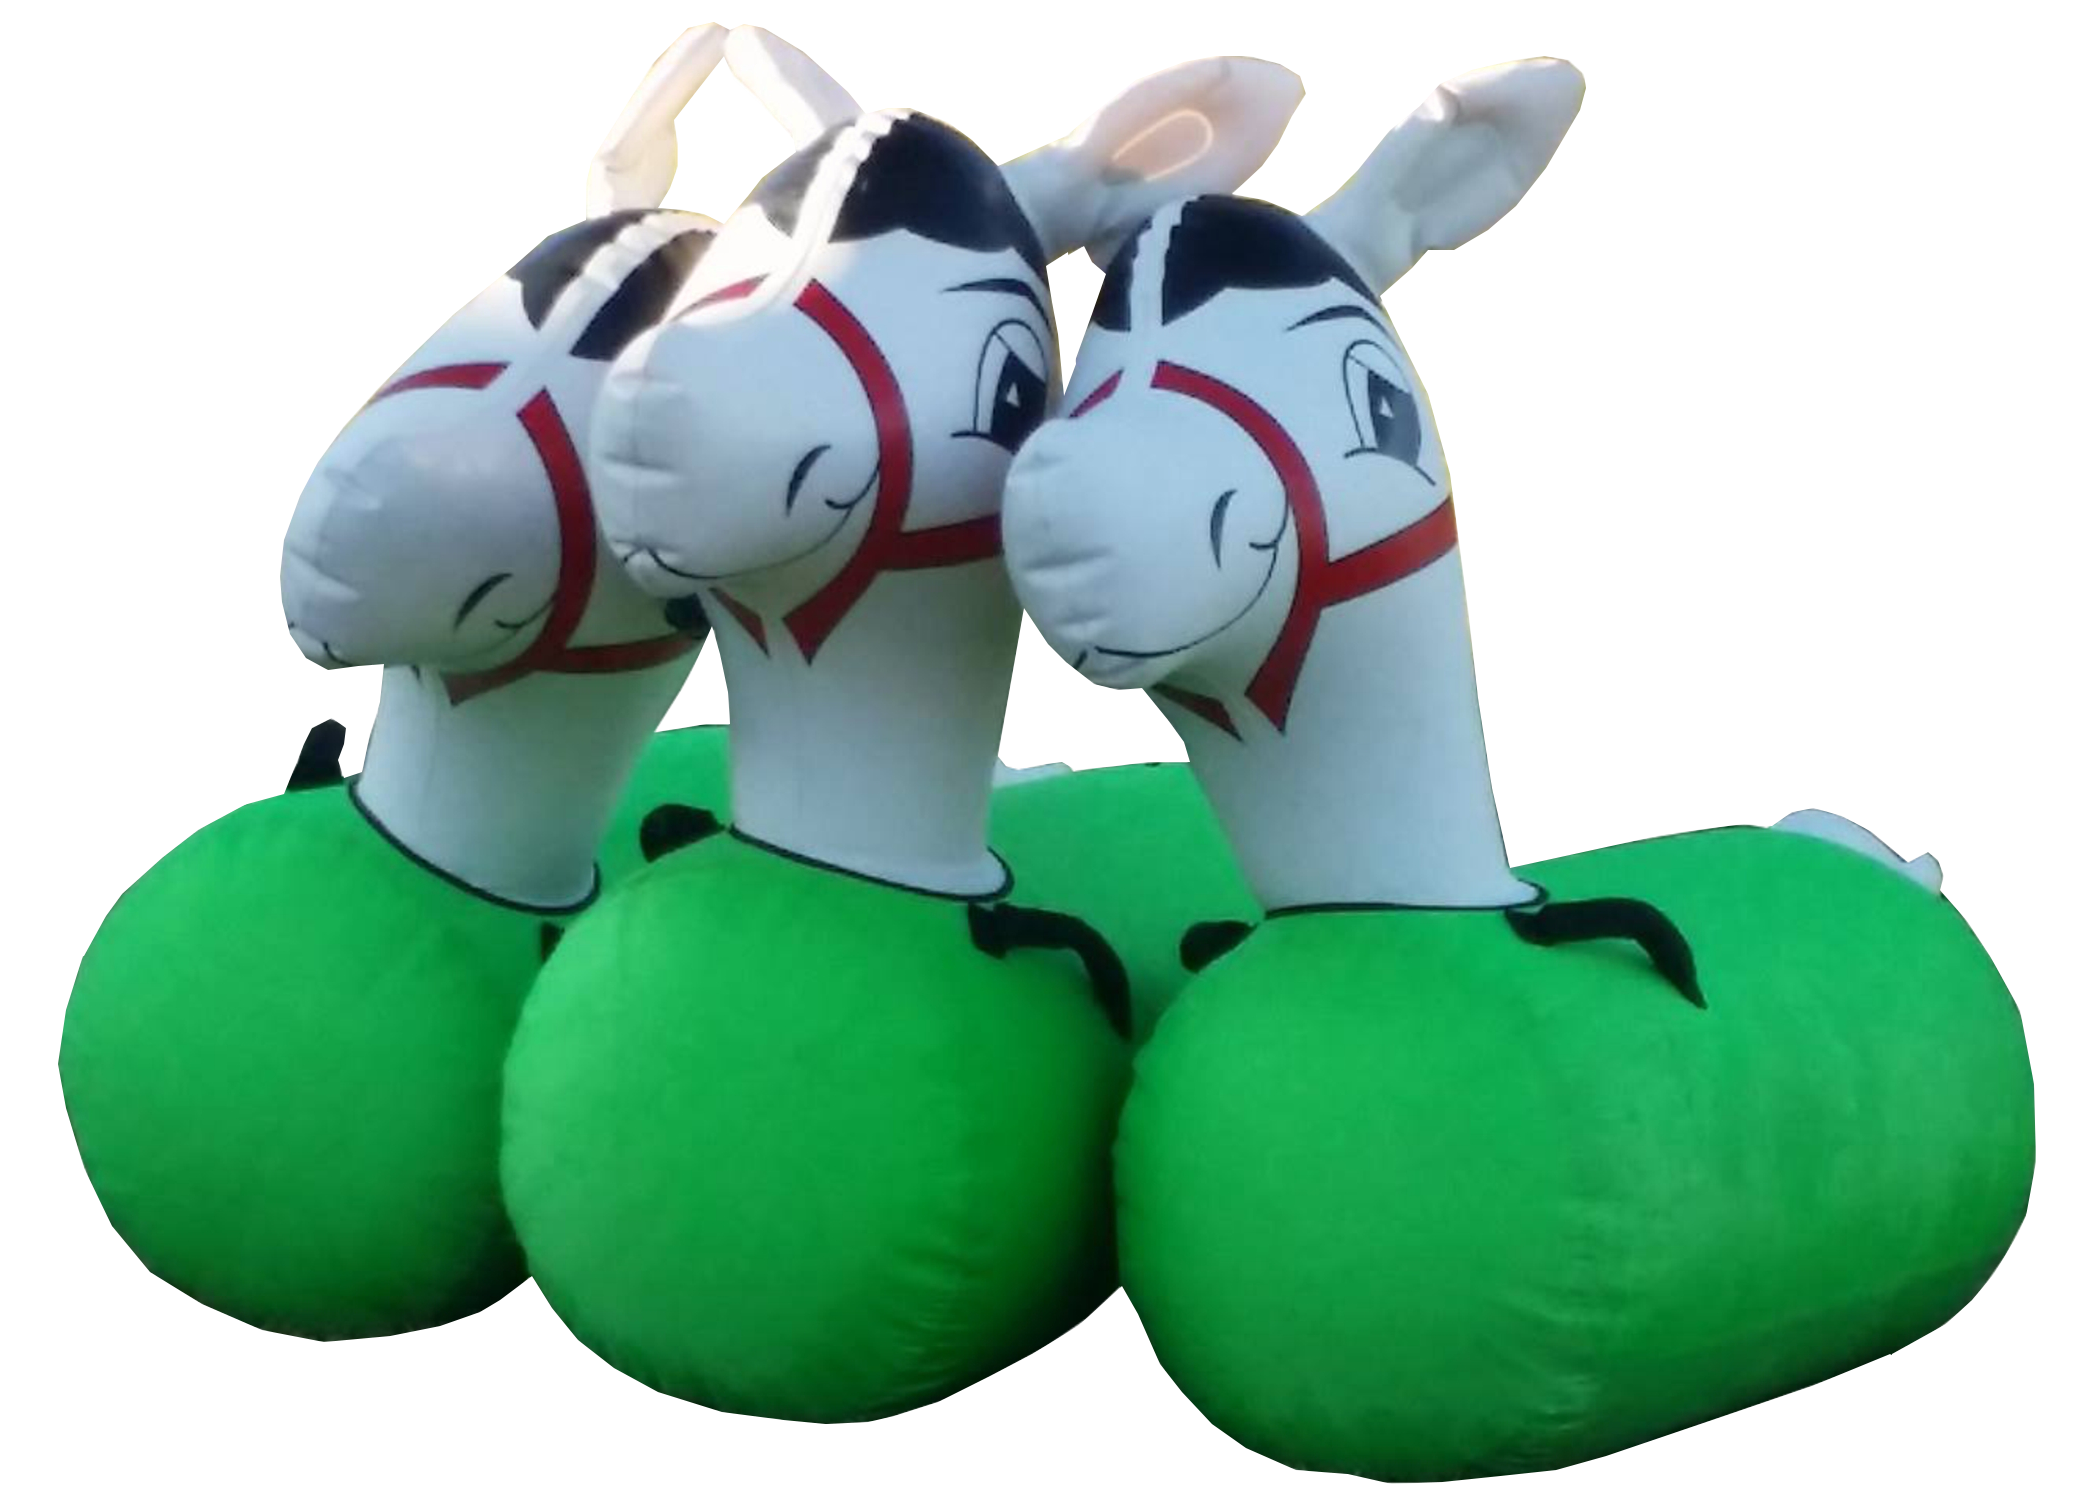 inflatable horses interactive games rental Murfreesboro